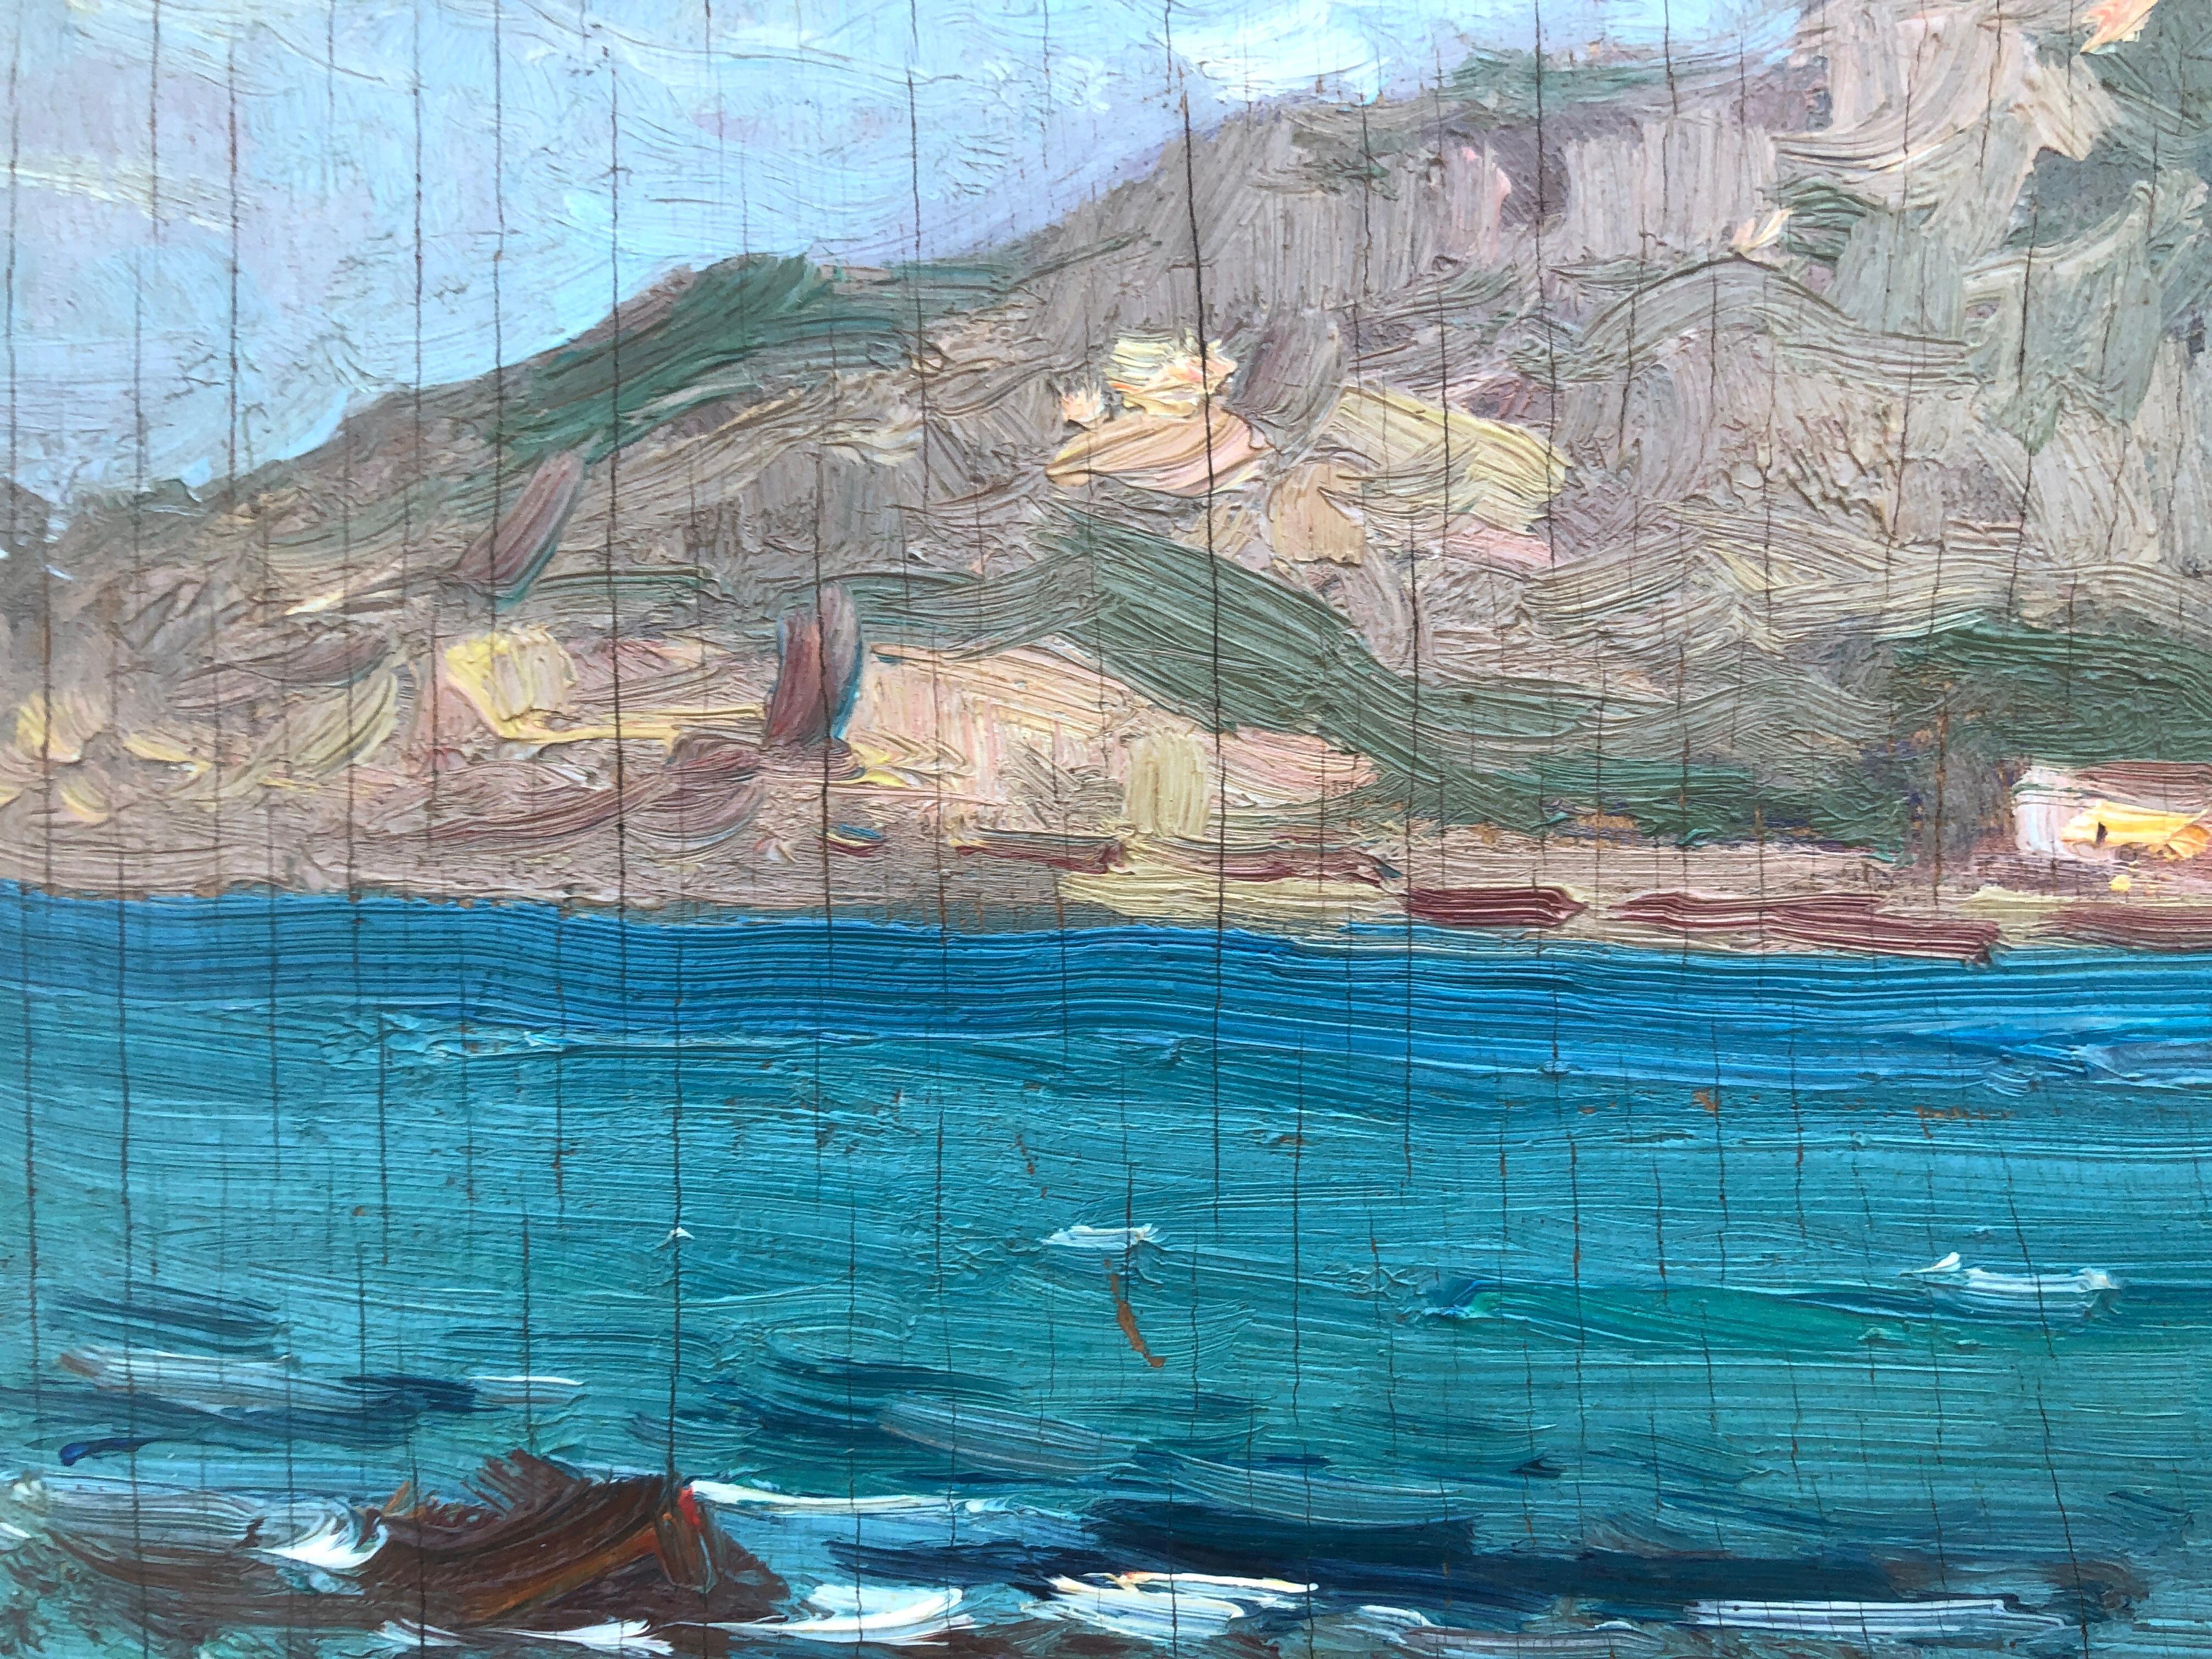 Spanish seascape oil on board painting impressionism Spain mediterranean - Impressionist Painting by Joaquin Terruella Matilla